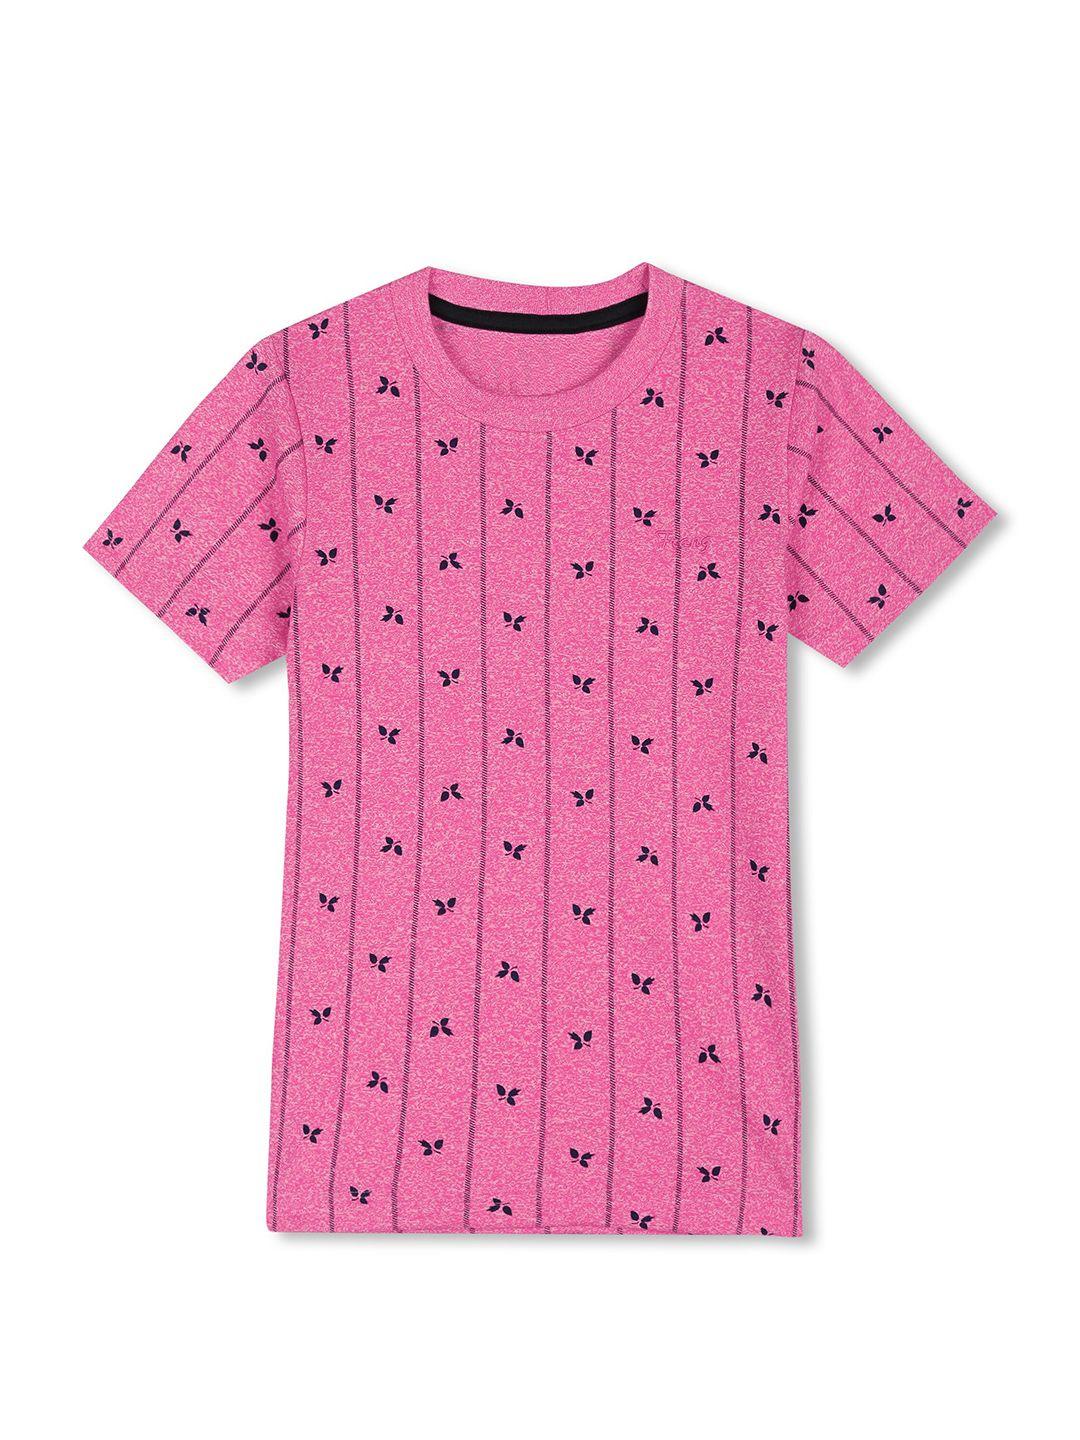 baesd boys pink printed t-shirt